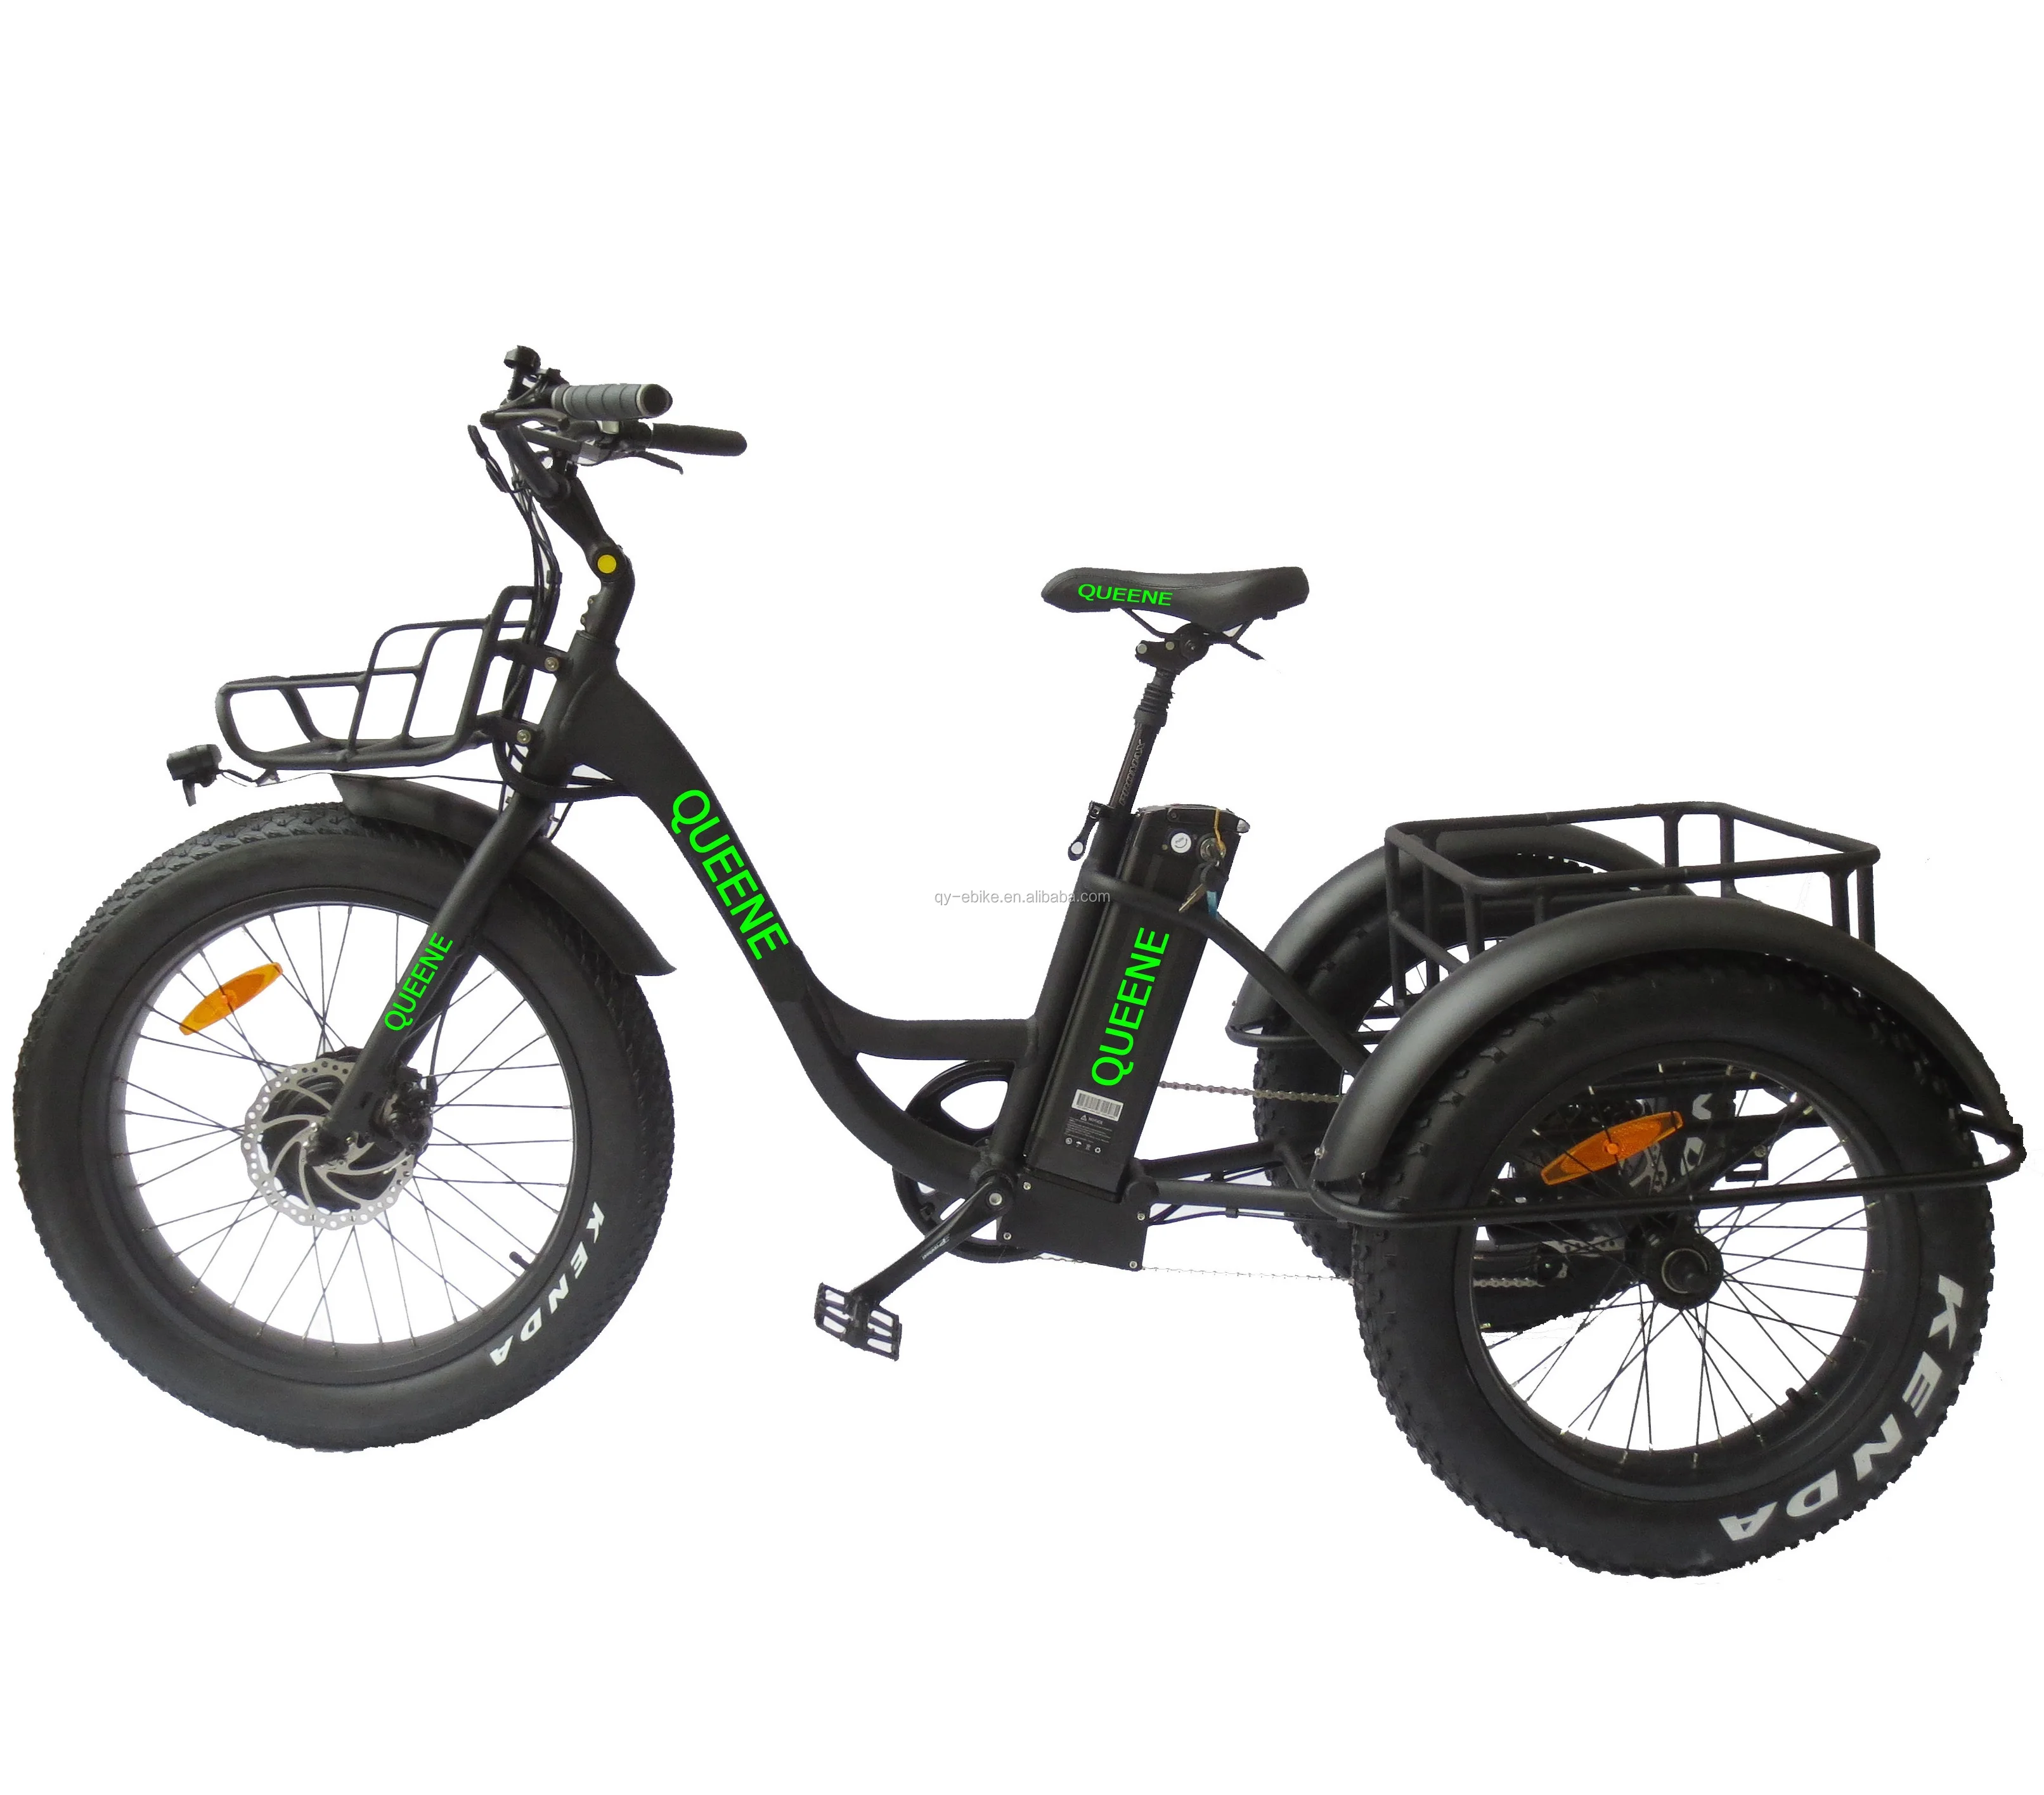 24 inch wheel bike for adults